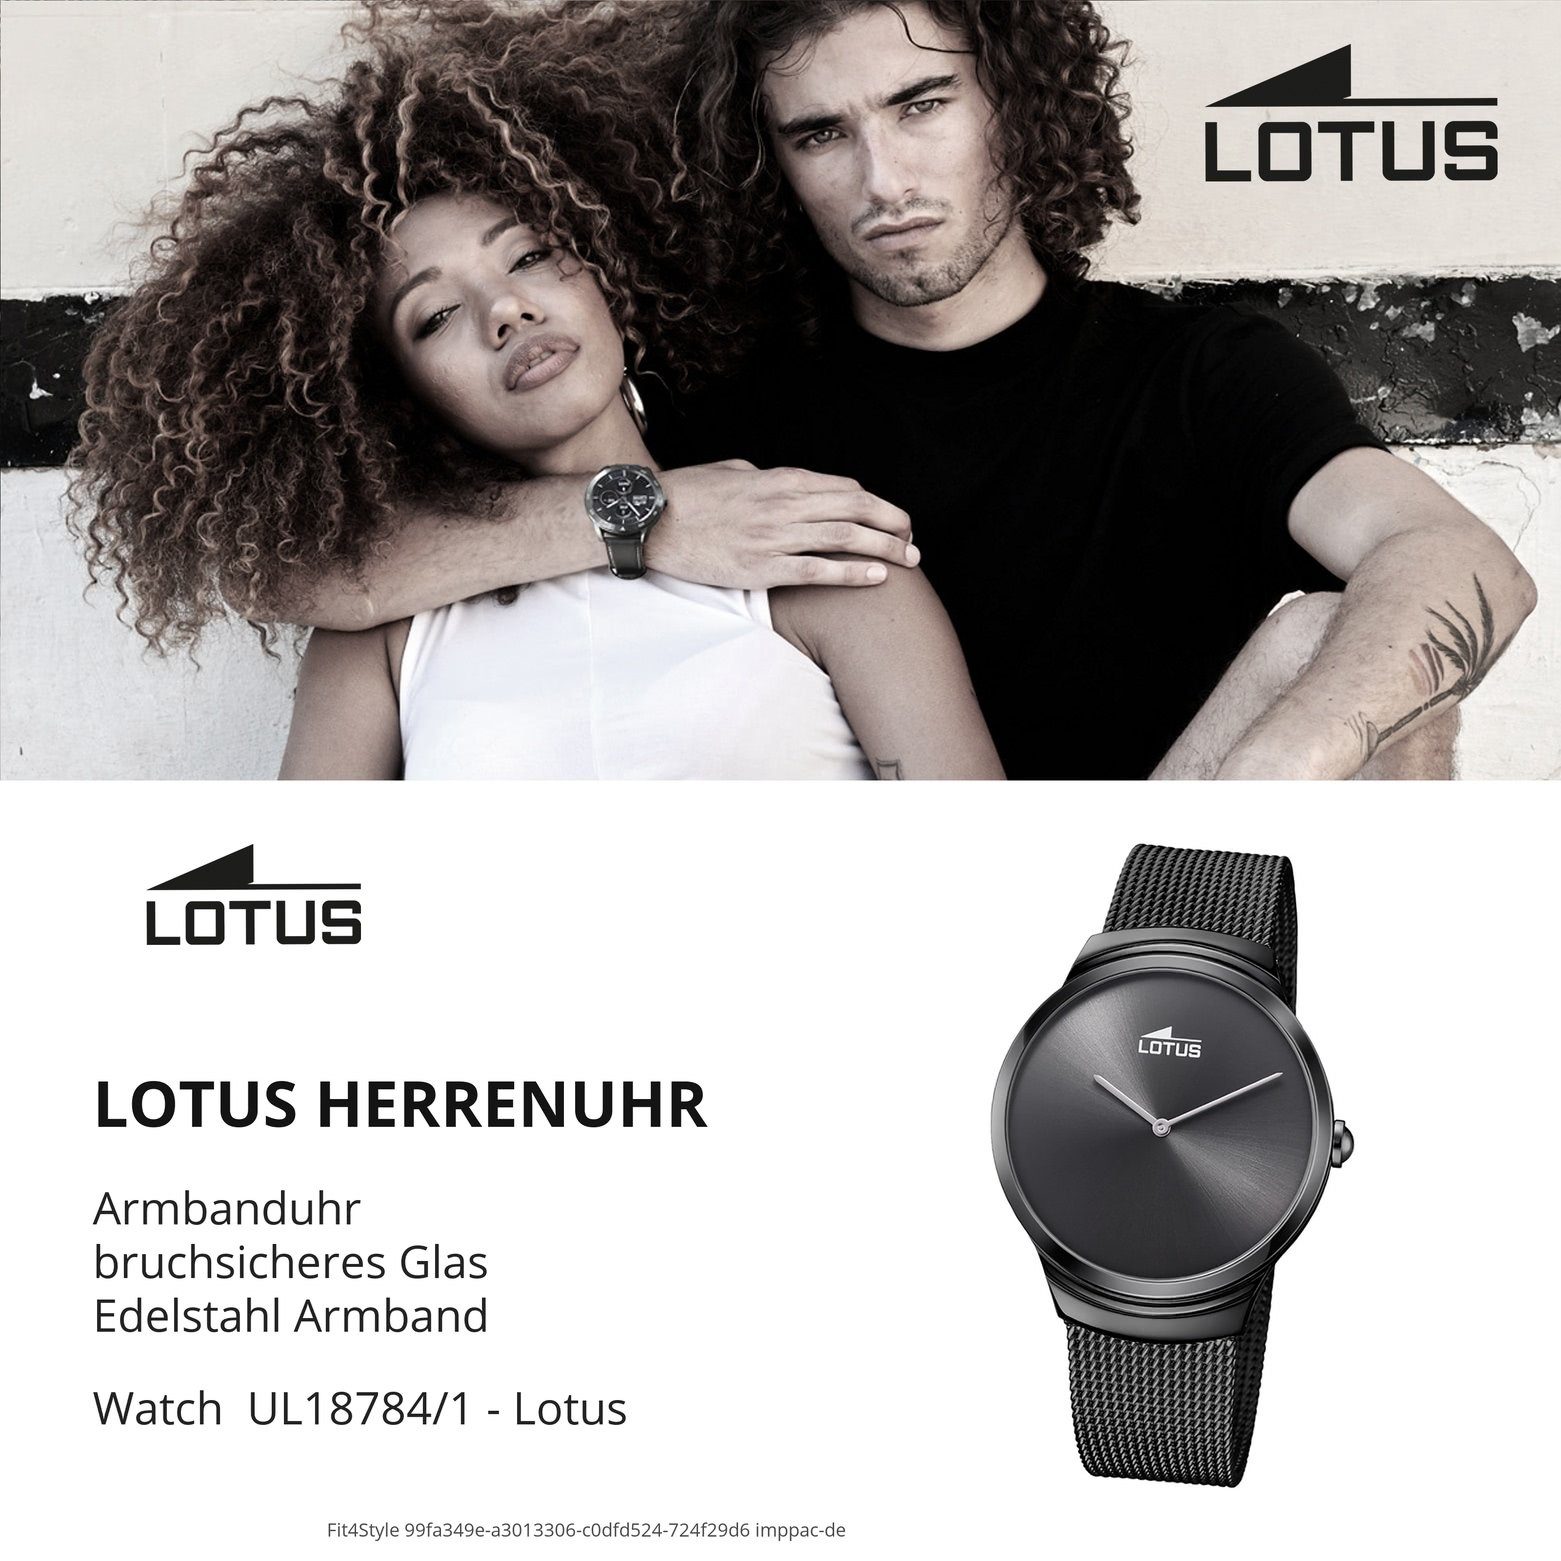 Quarzuhr Lotus Edelstahlarmband rund, Herren Herrenuhr Minimalist, Armbanduhr 39mm) mittel schwarz Lotus (ca.